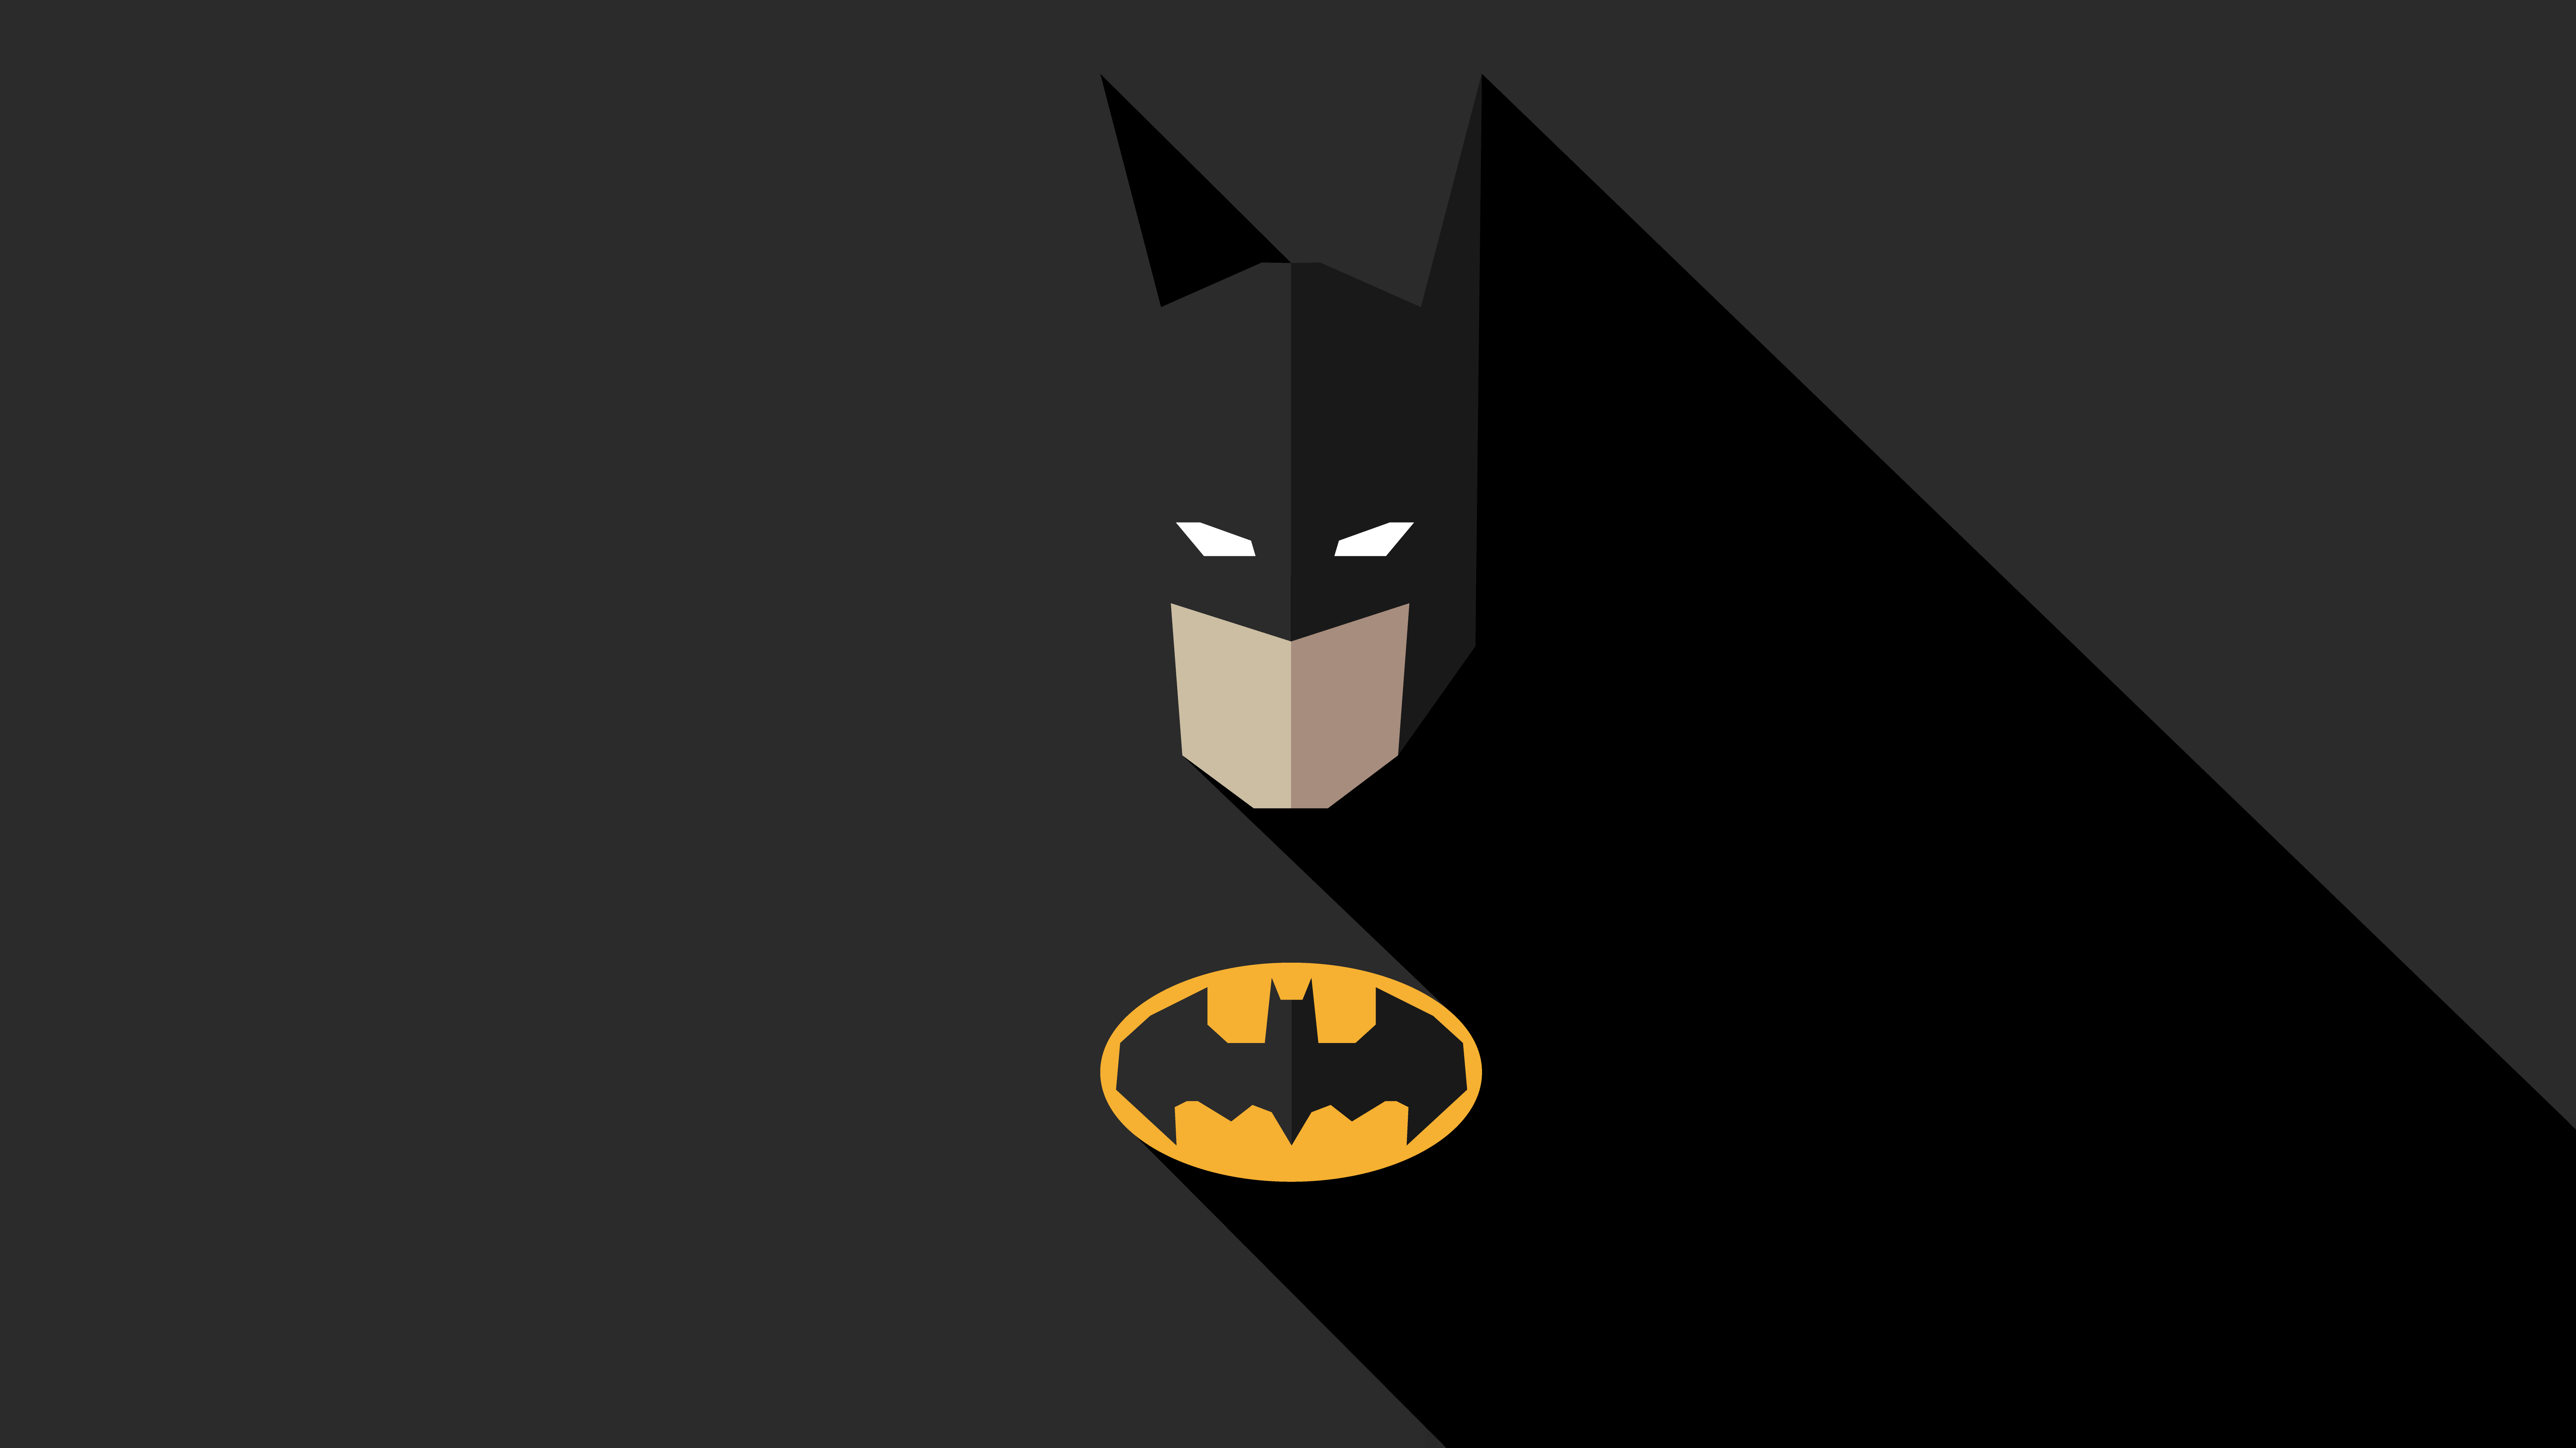 Batman HD Wallpapers | 4K Backgrounds - Wallpapers Den